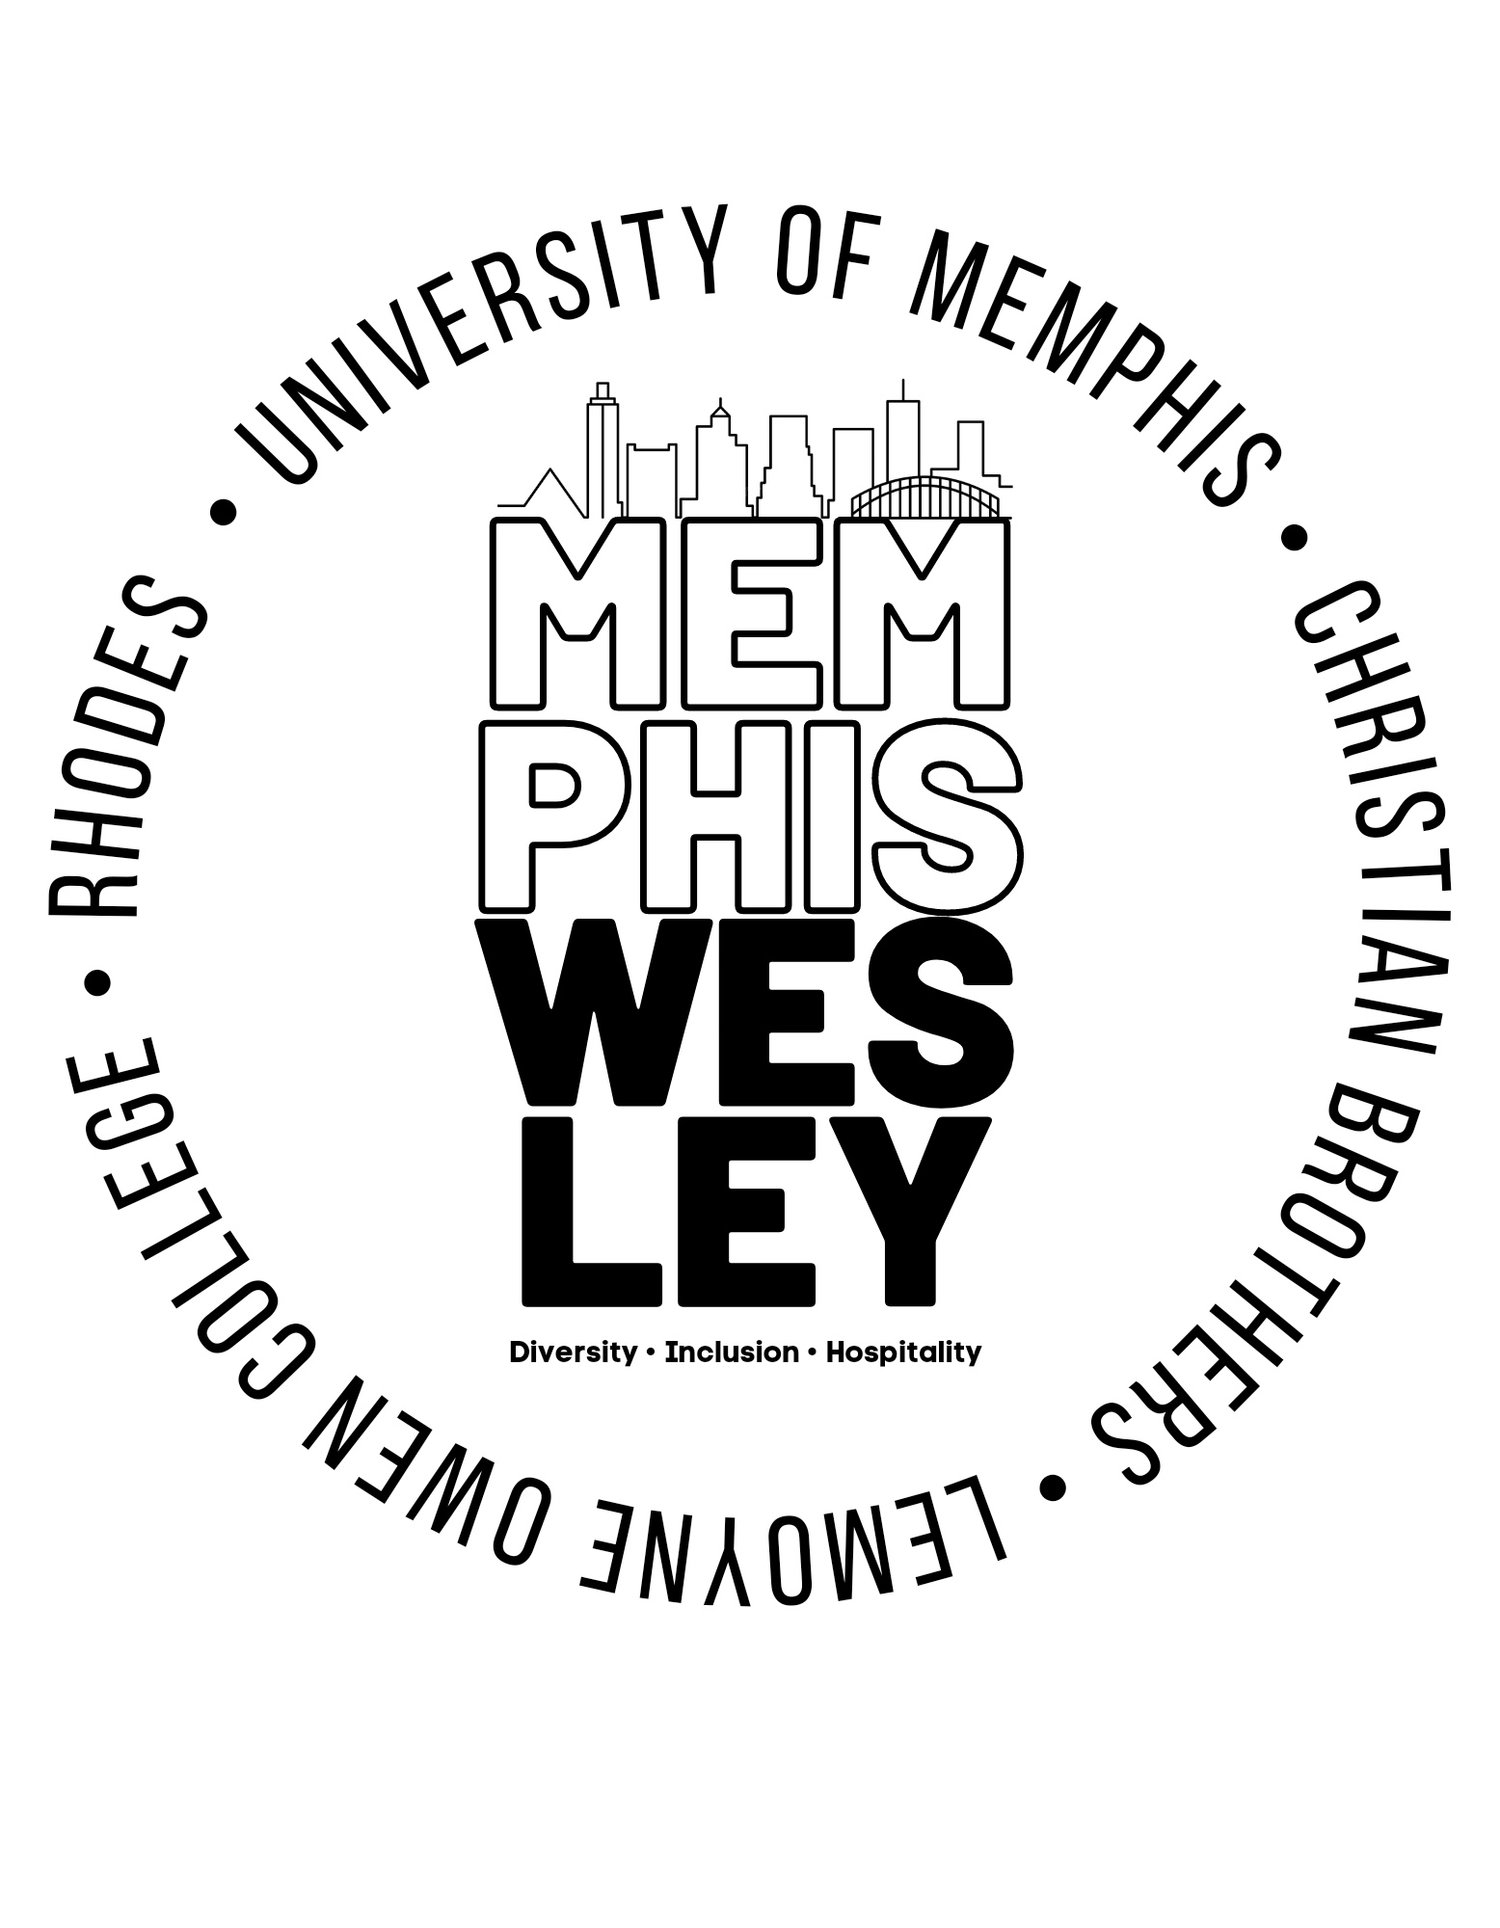 Memphis Wesley